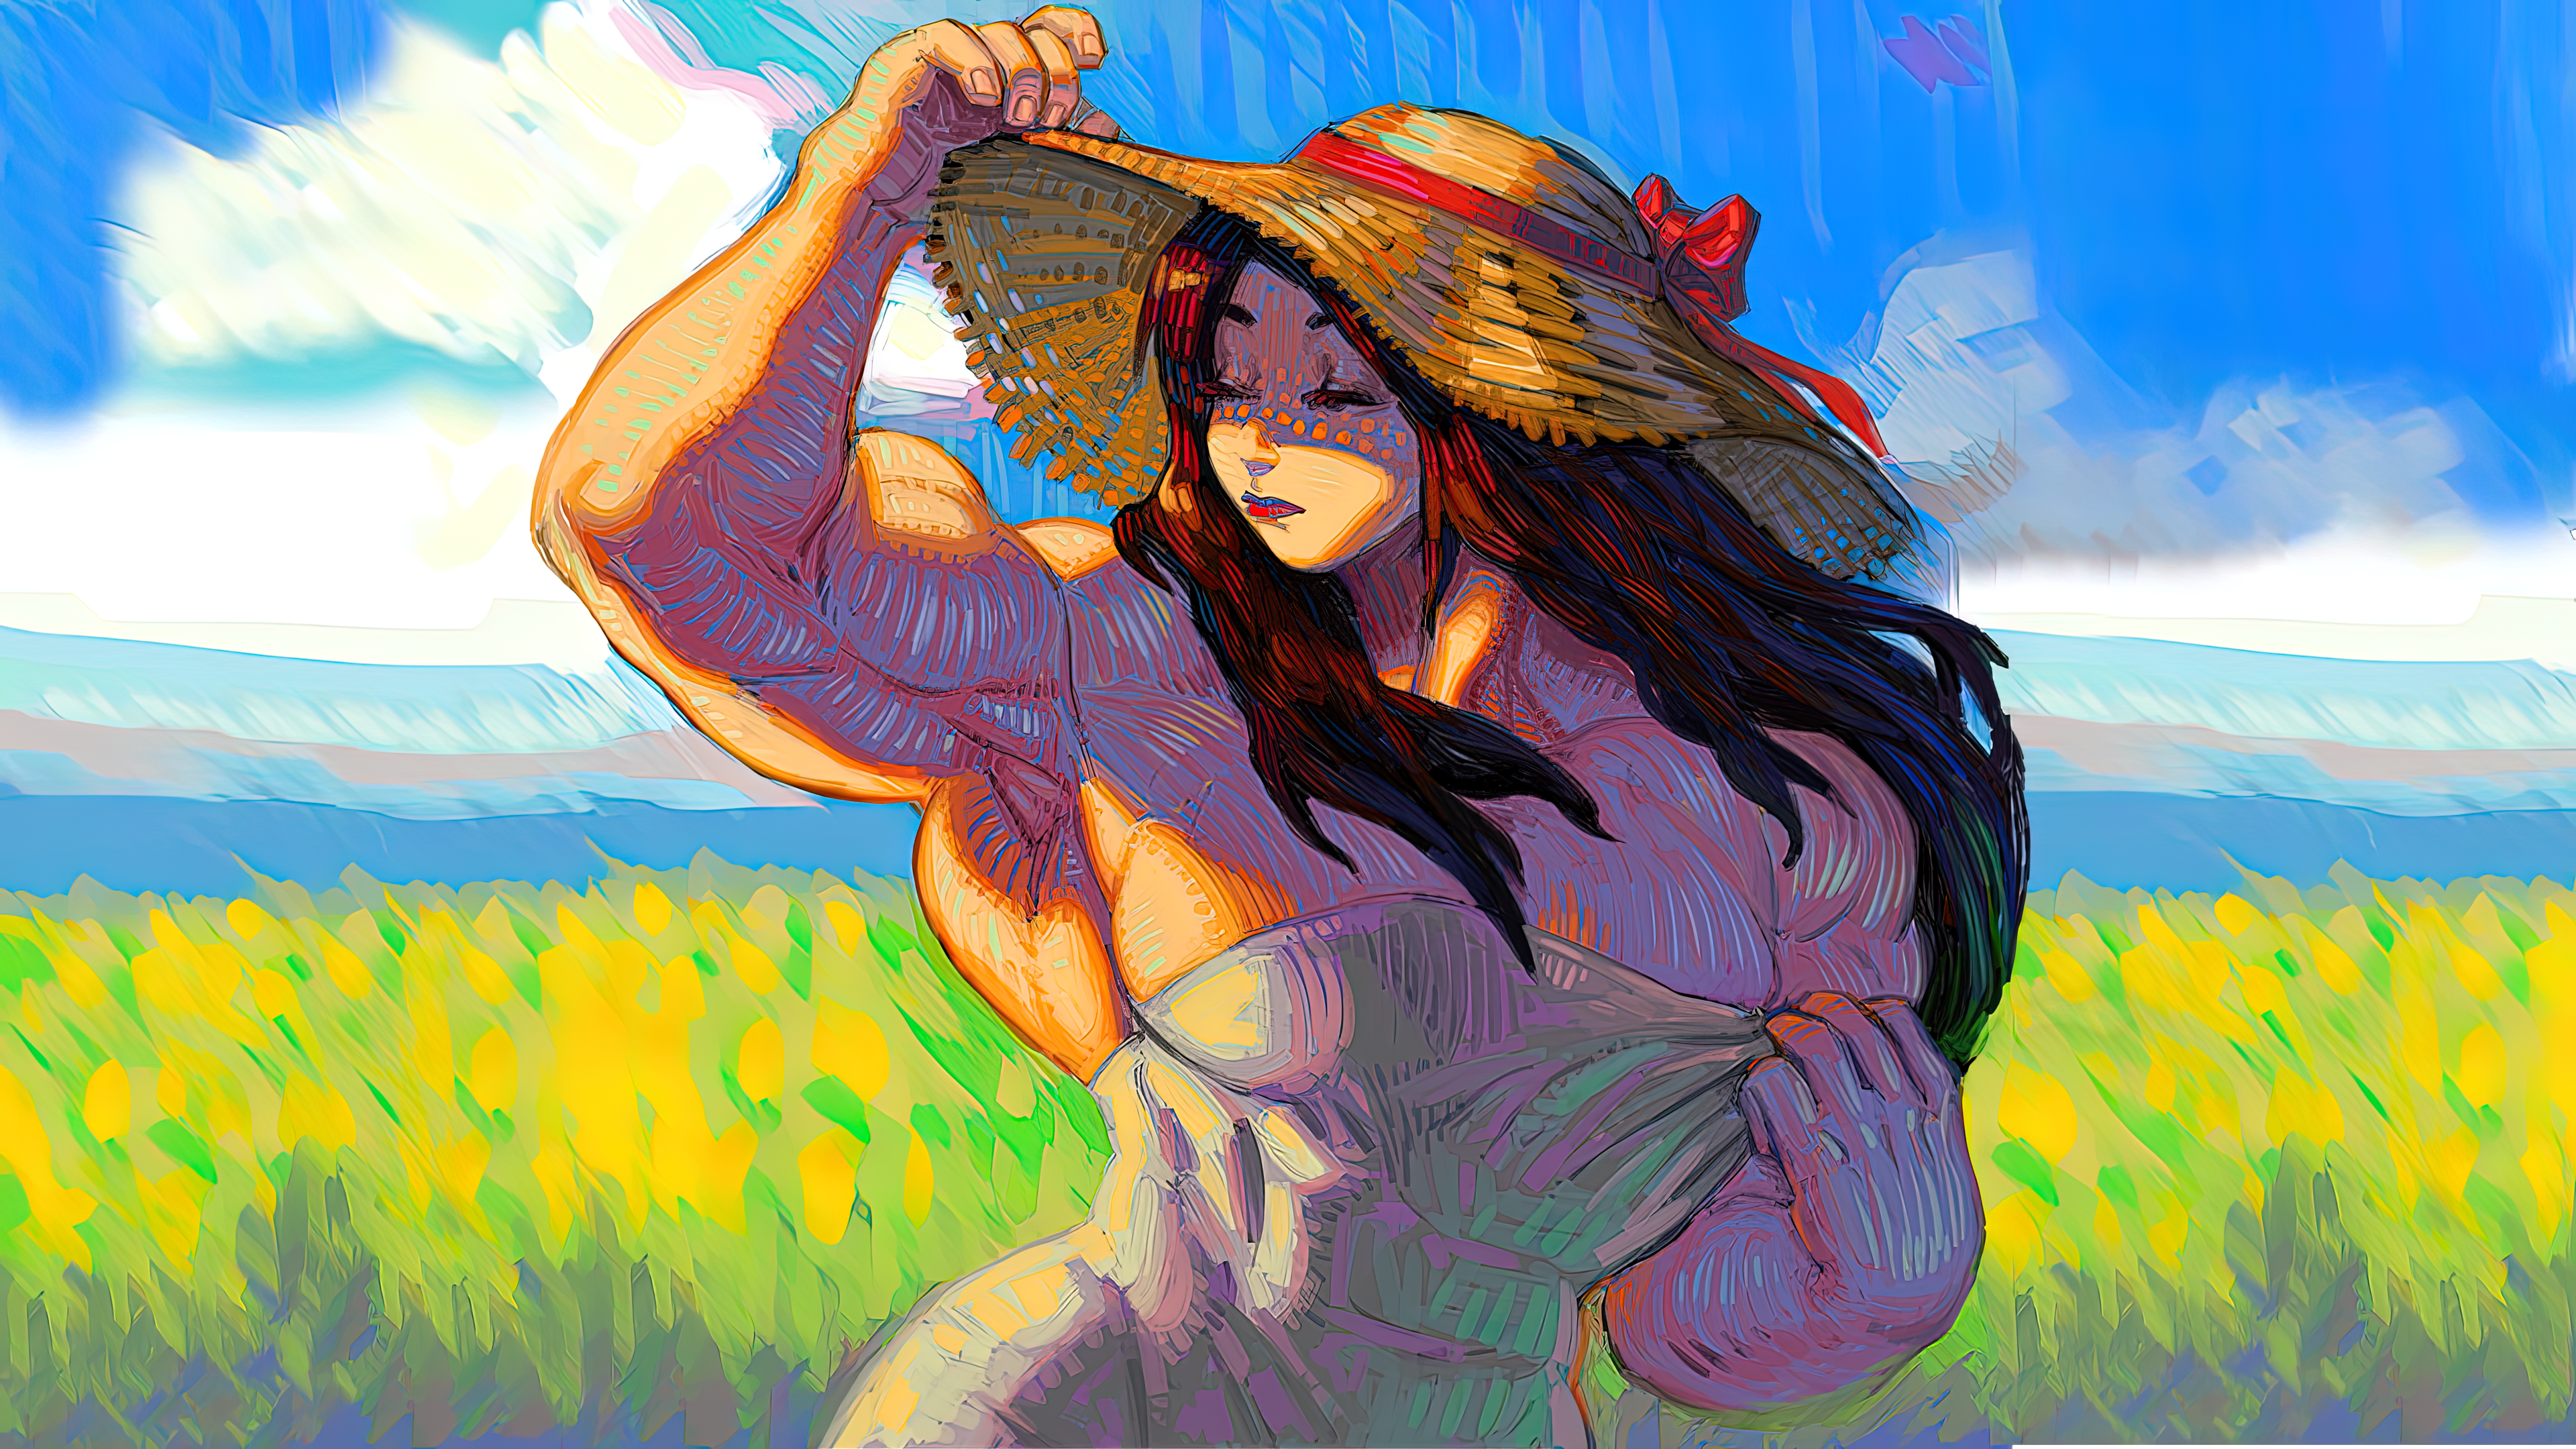 Drawing Muscles Muscular Biceps Toned Female Artwork Digital Art Straw Hat Closed Eyes 3840x2160